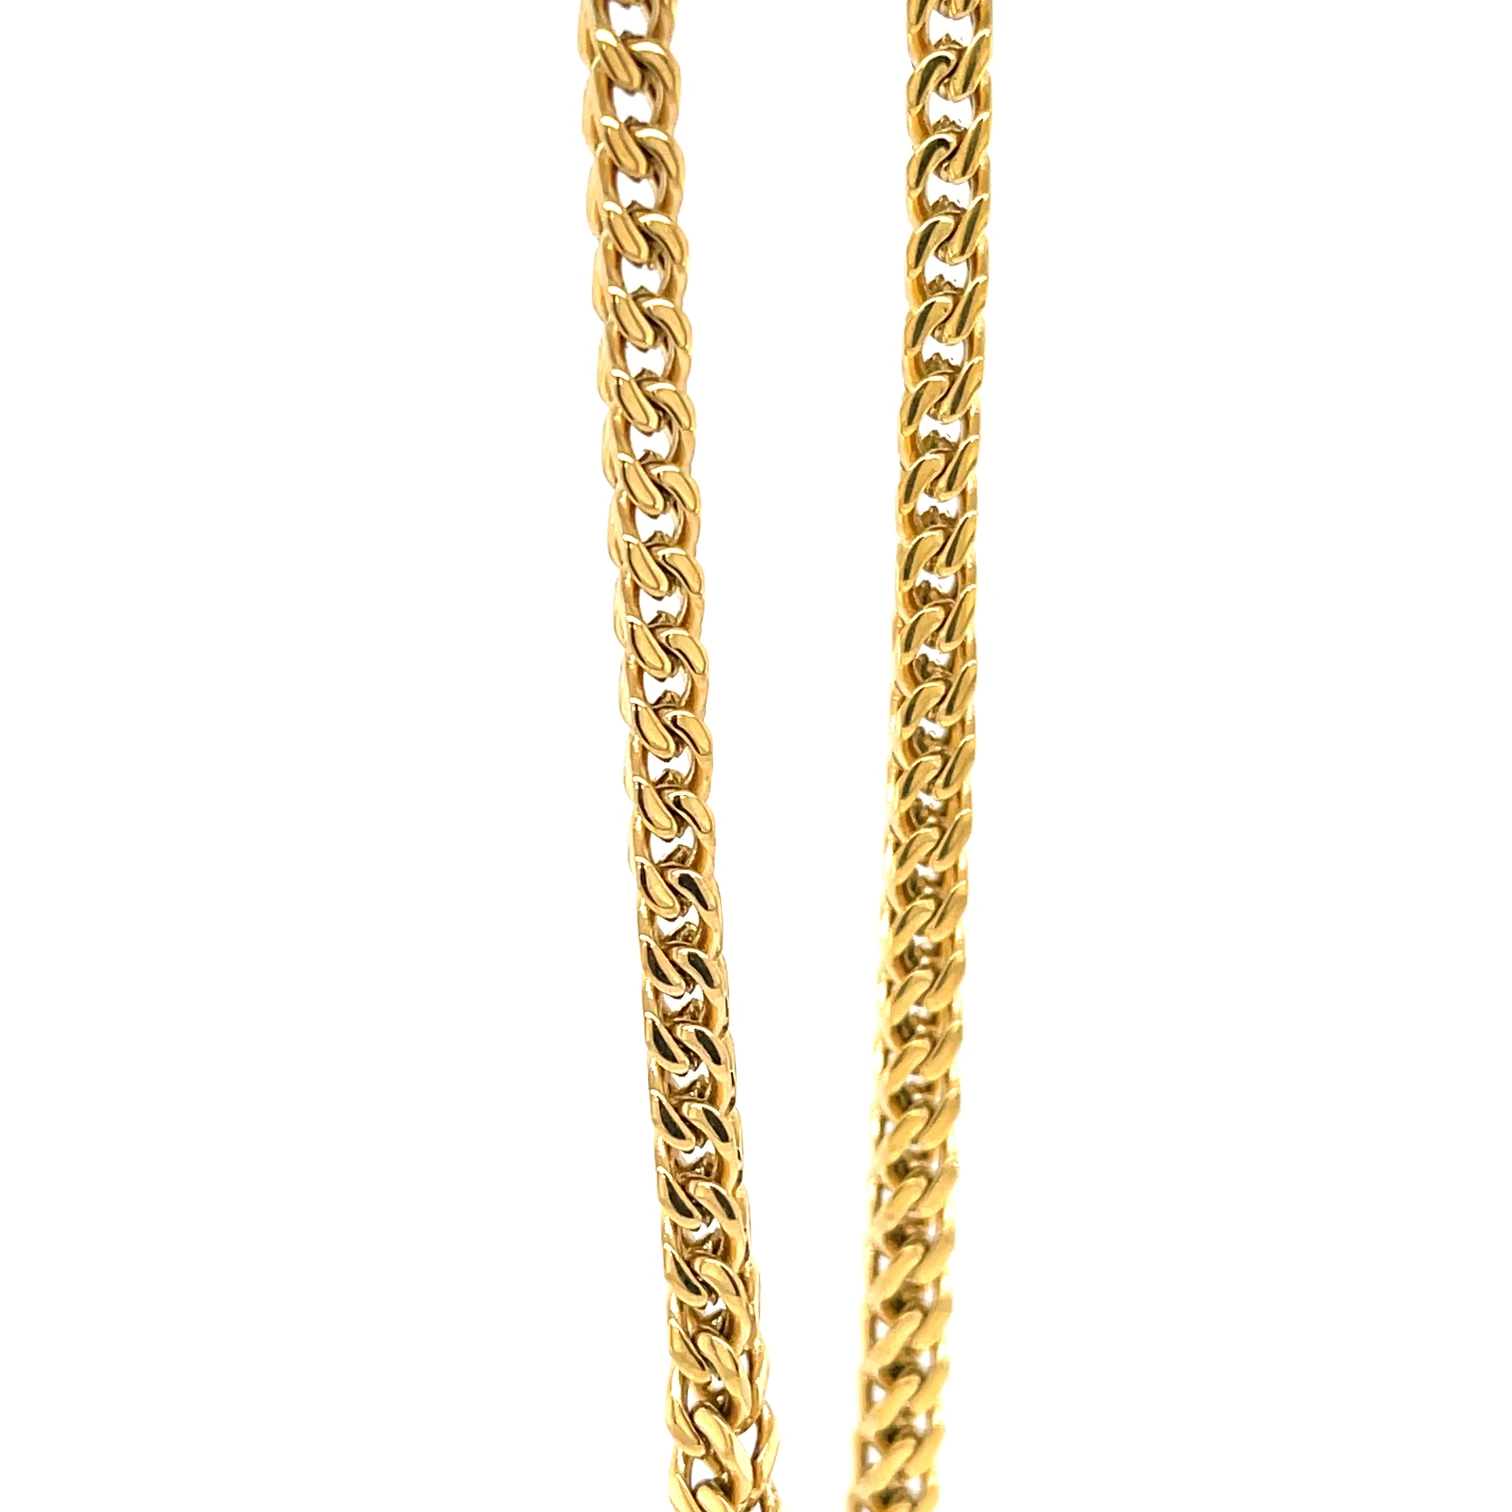 Franco Chain (Gold)